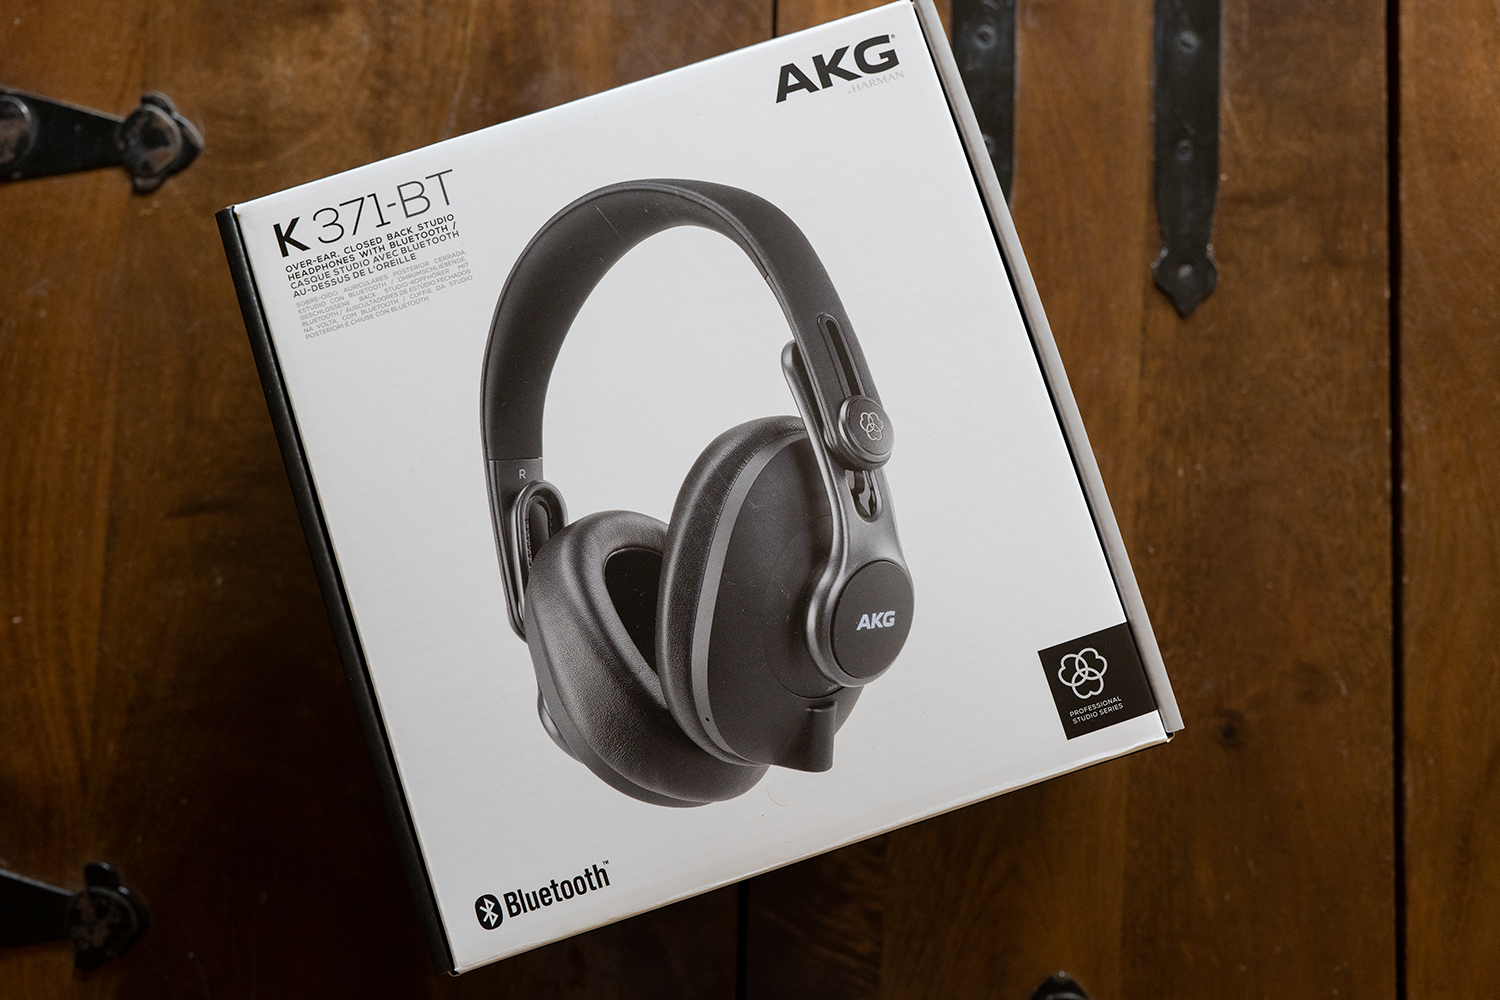 akg k371 bt headphones review 3